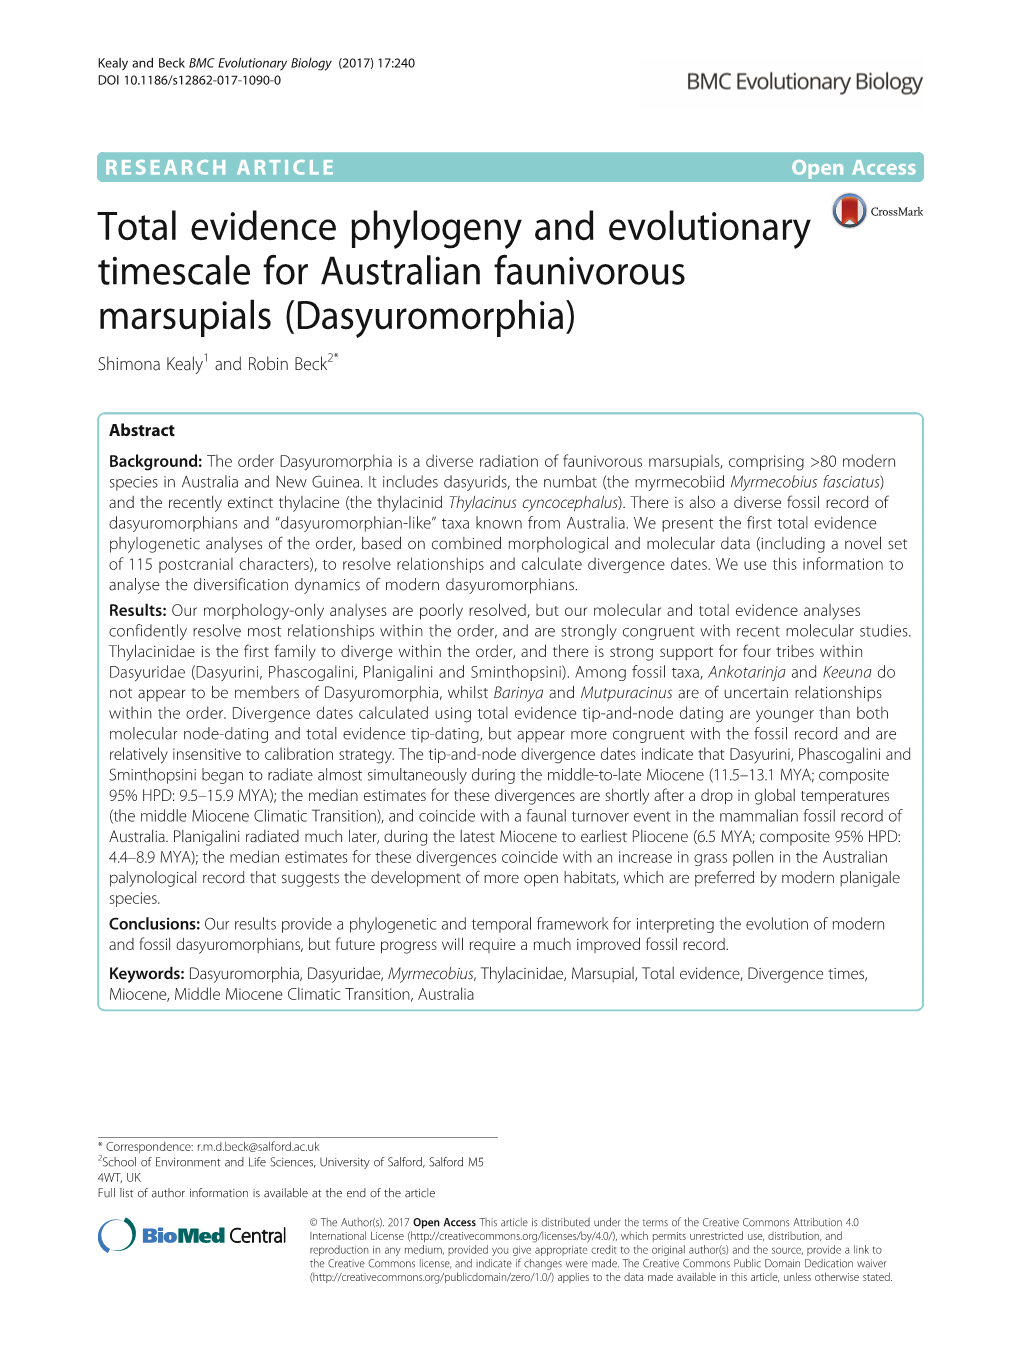 Total Evidence Phylogeny and Evolutionary Timescale for Australian Faunivorous Marsupials (Dasyuromorphia) Shimona Kealy1 and Robin Beck2*